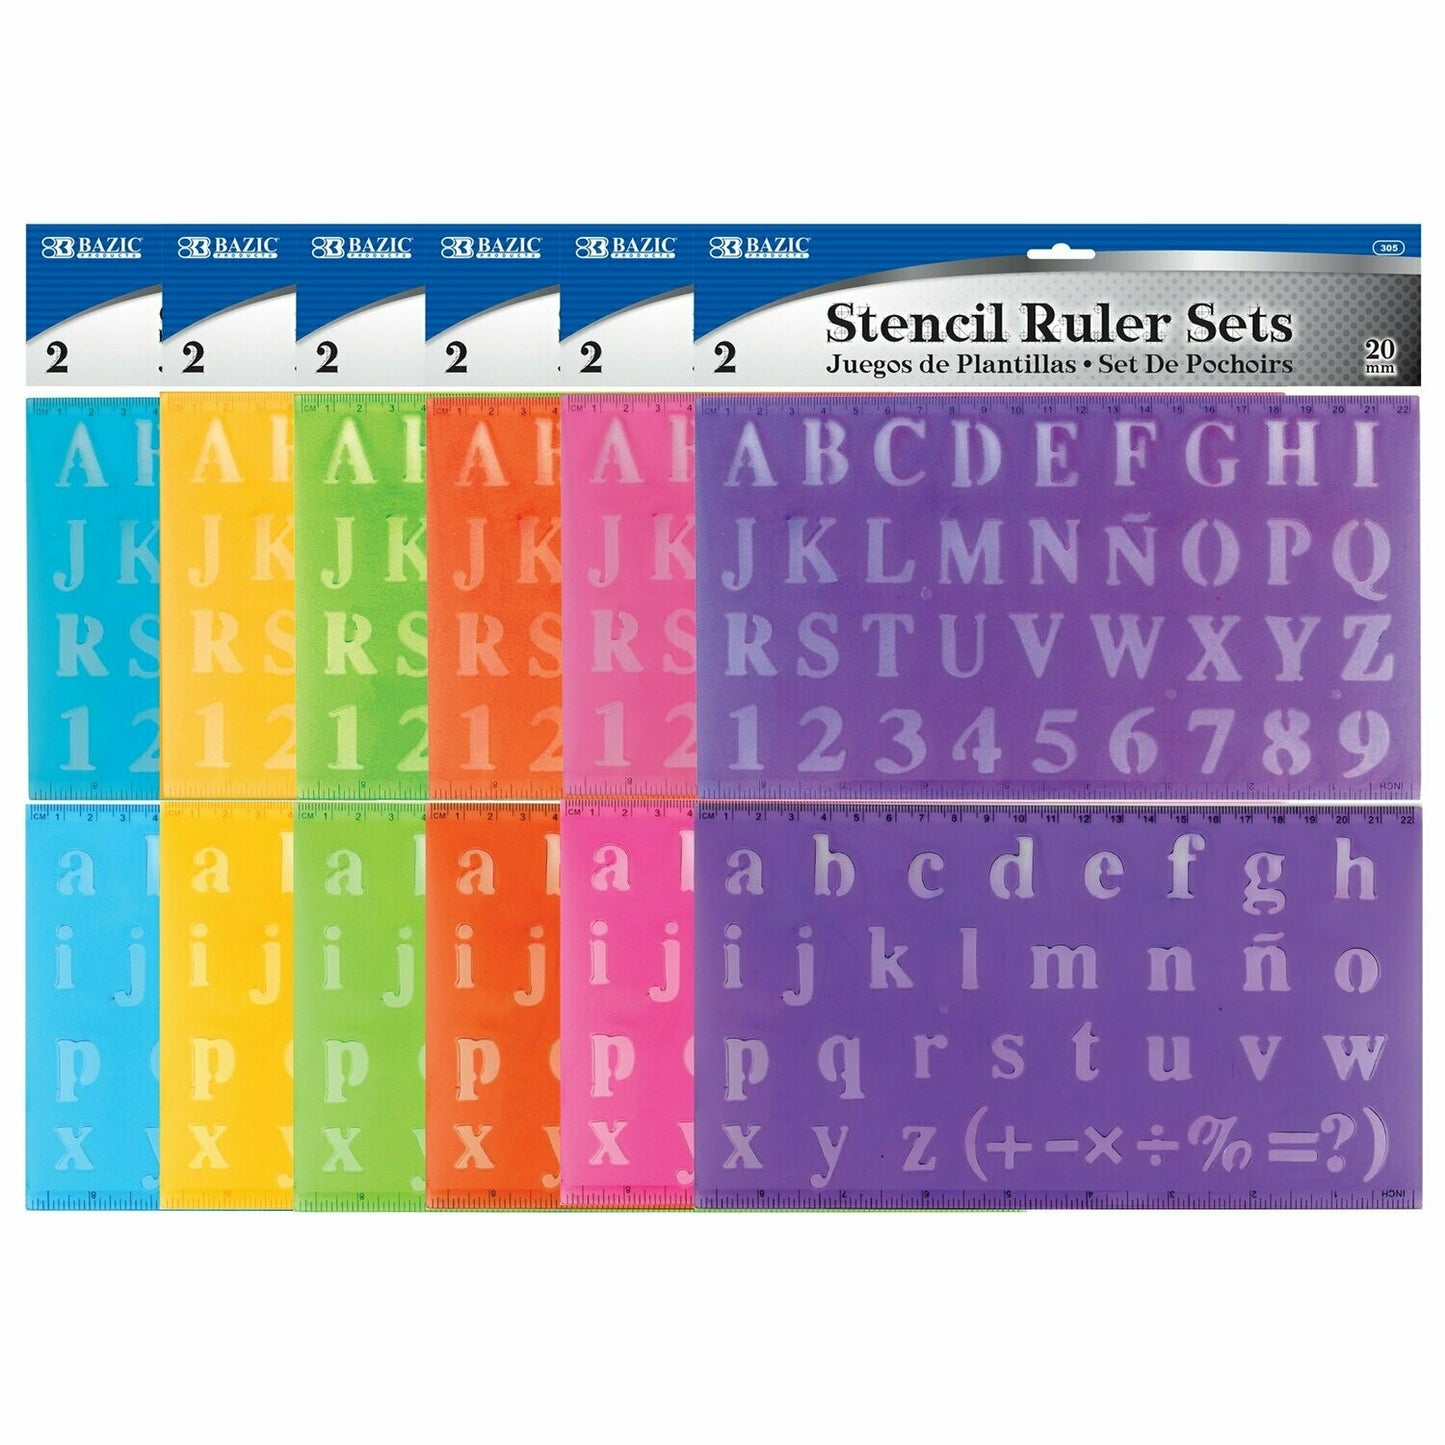 Stencil Ruler Sets [pk-2]